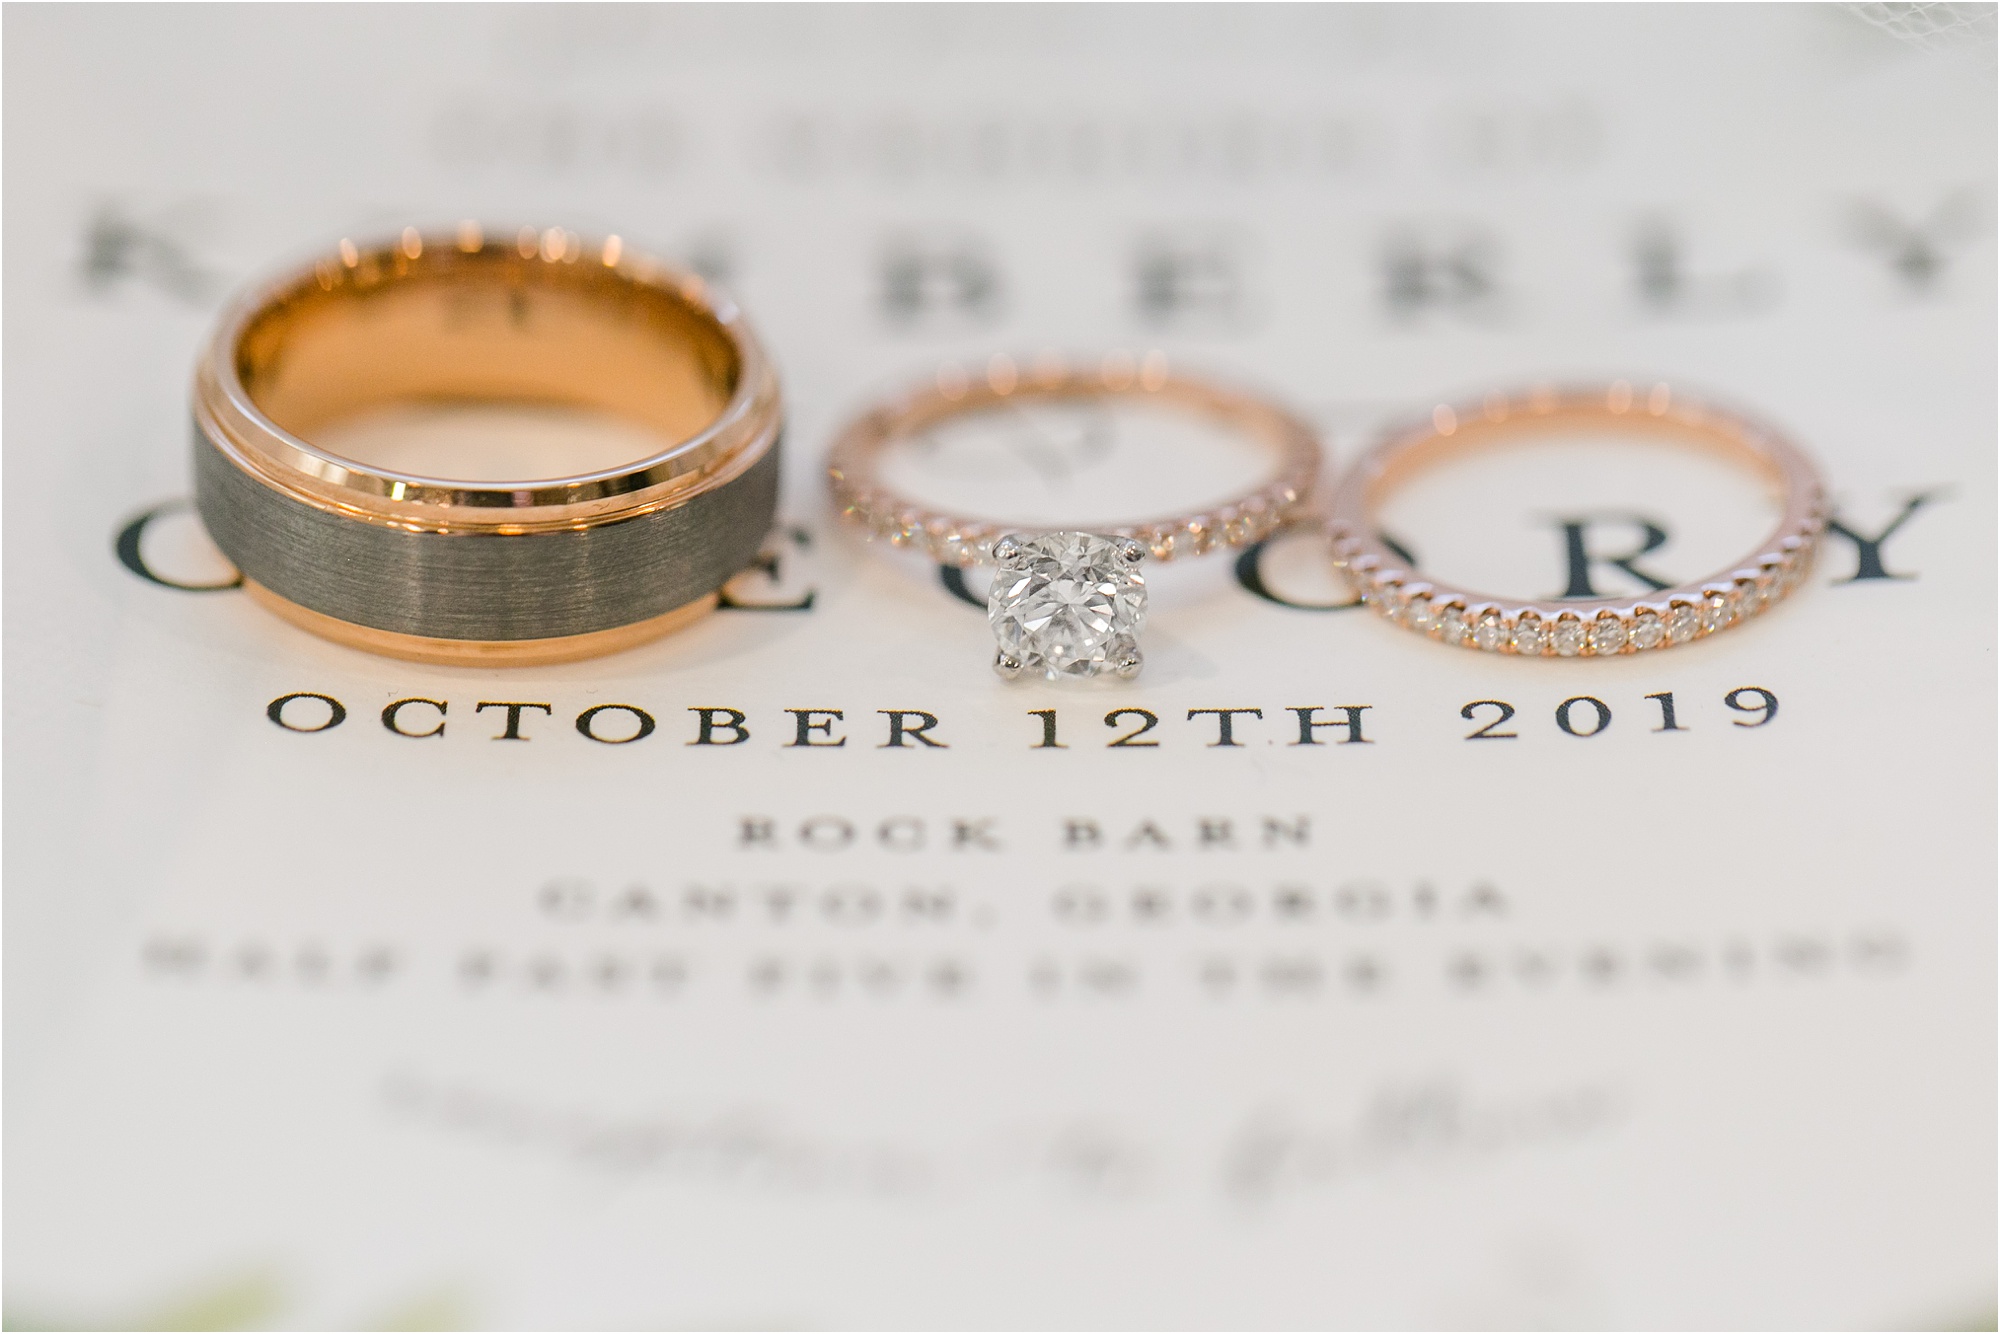 rock barn canton ga macon ga wedding photographer details wedding rings invitation